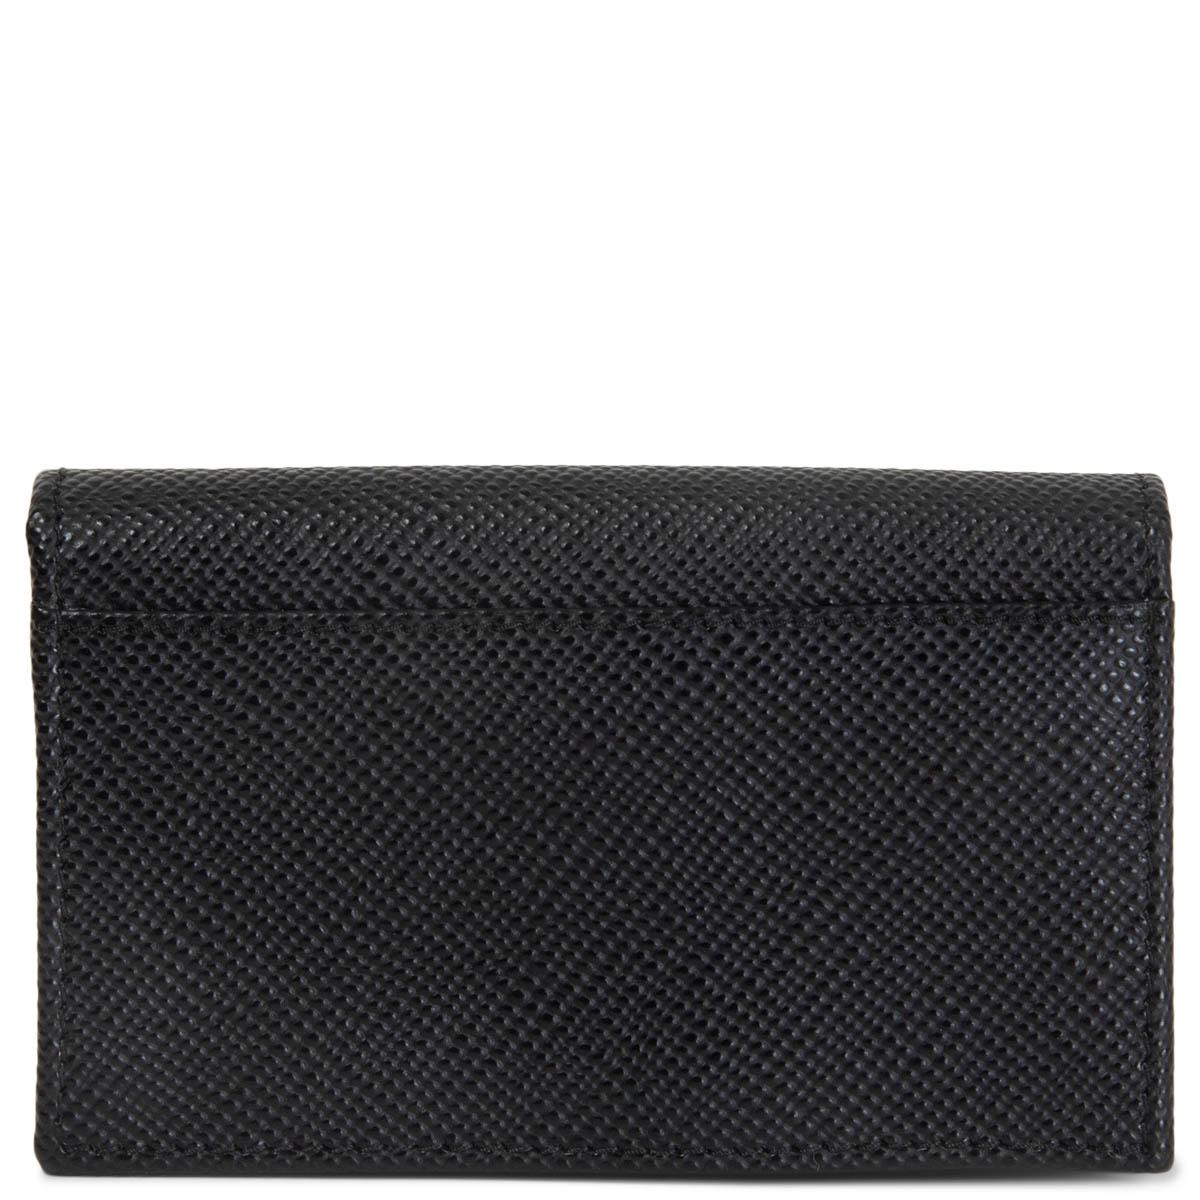 Black PRADA black leather SAFFIANO Credit Card & Coin Wallet